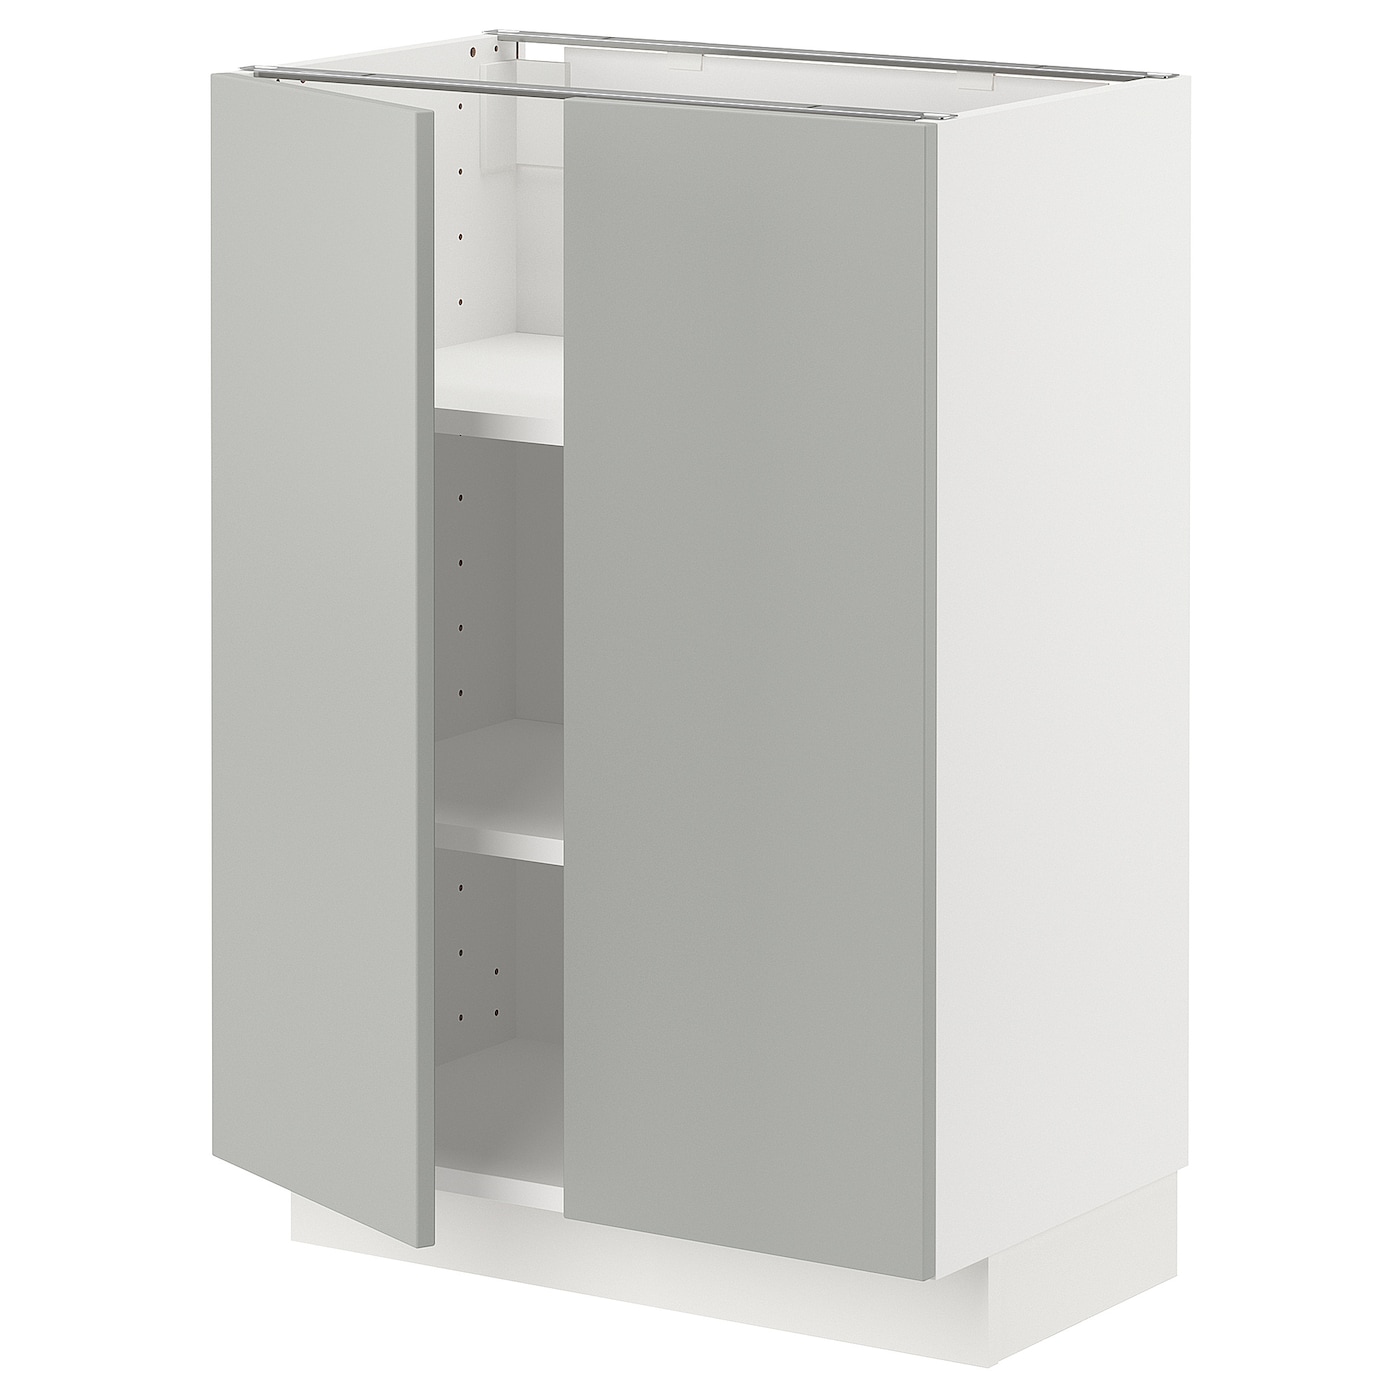 Напольный шкаф - METOD IKEA/ МЕТОД ИКЕА,  60х88 см, белый/светло-серый